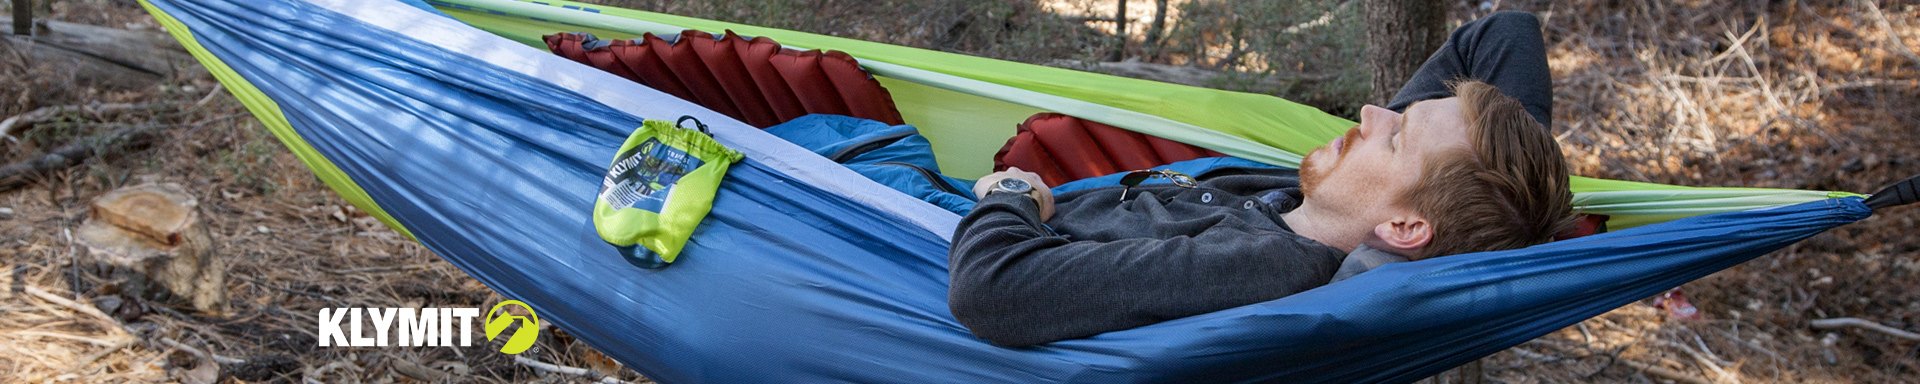 Klymit Camping Sleeping Bags & Pads